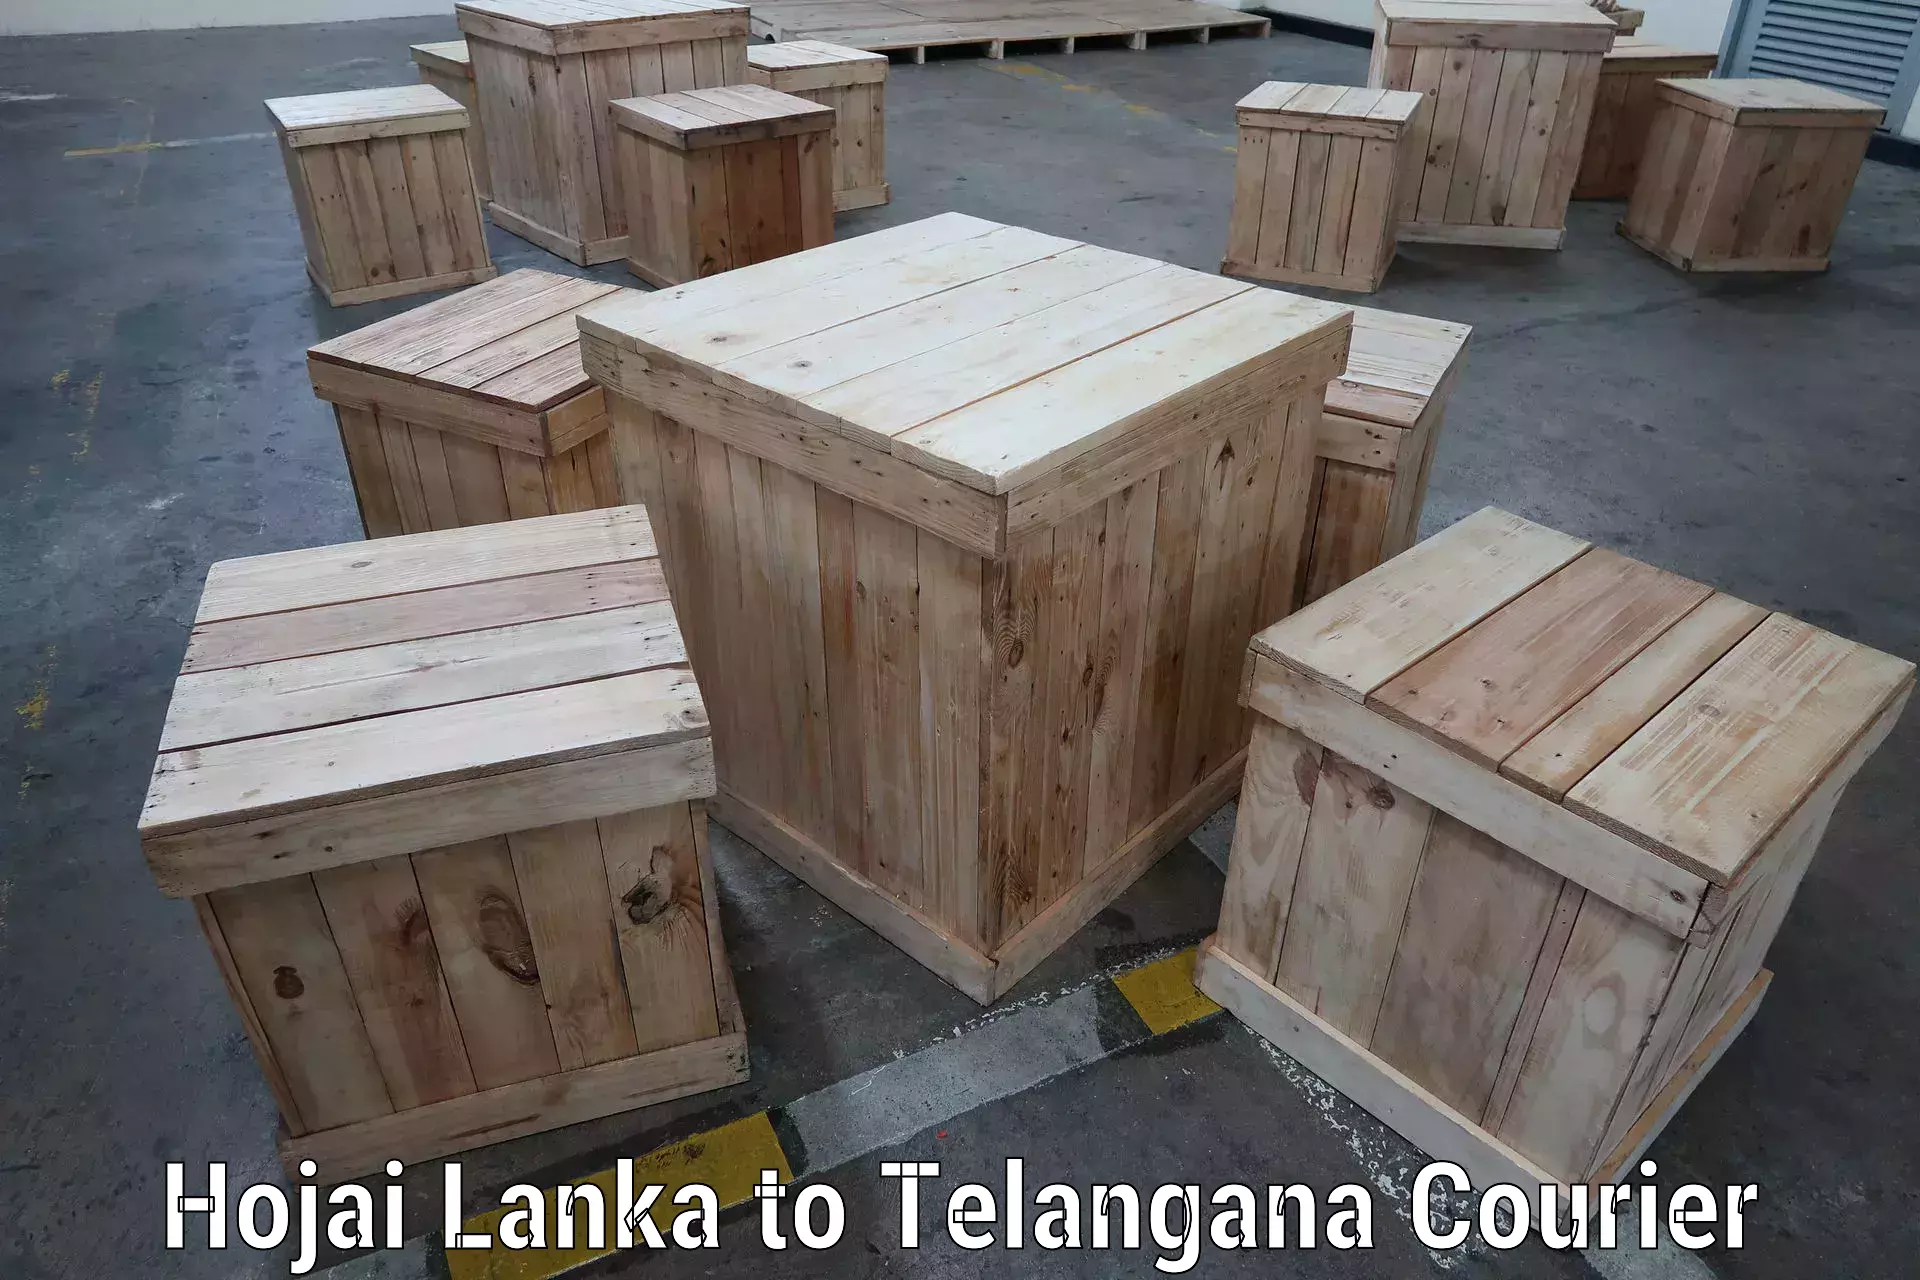 Courier service efficiency Hojai Lanka to Telangana